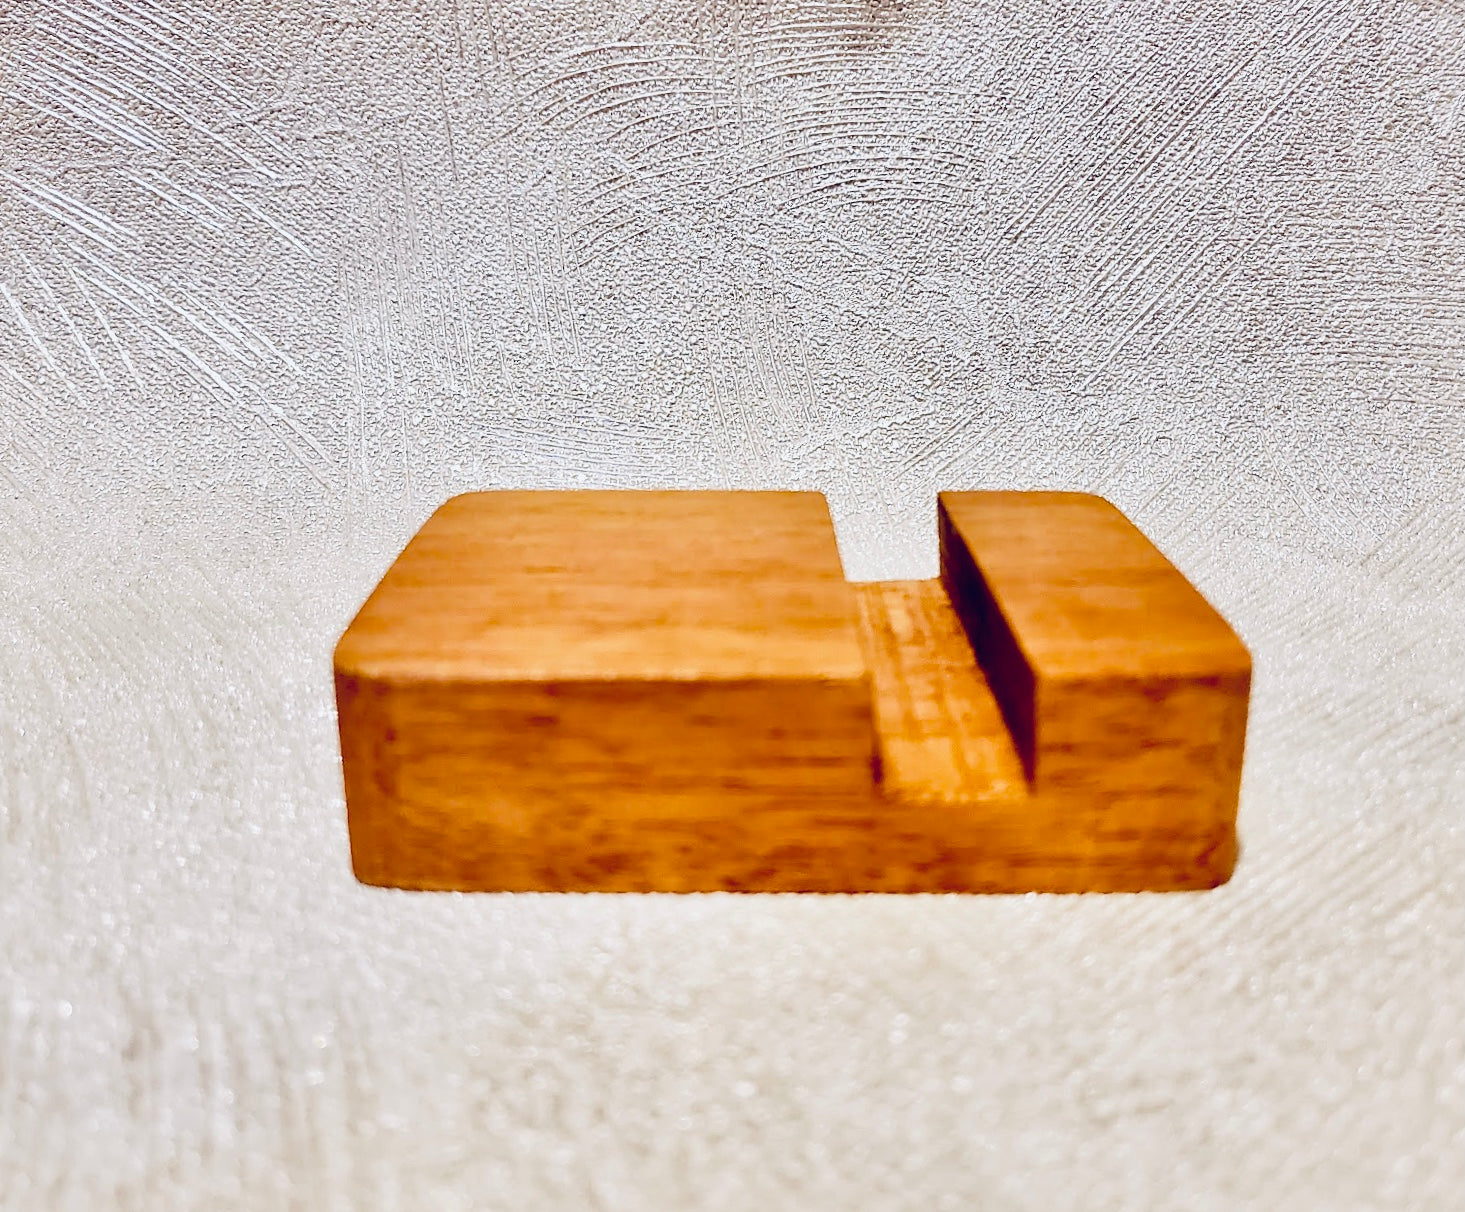 ‘I’m Handmade’ Wooden Phone stand holder (for travelling) - Ecofrenli.com